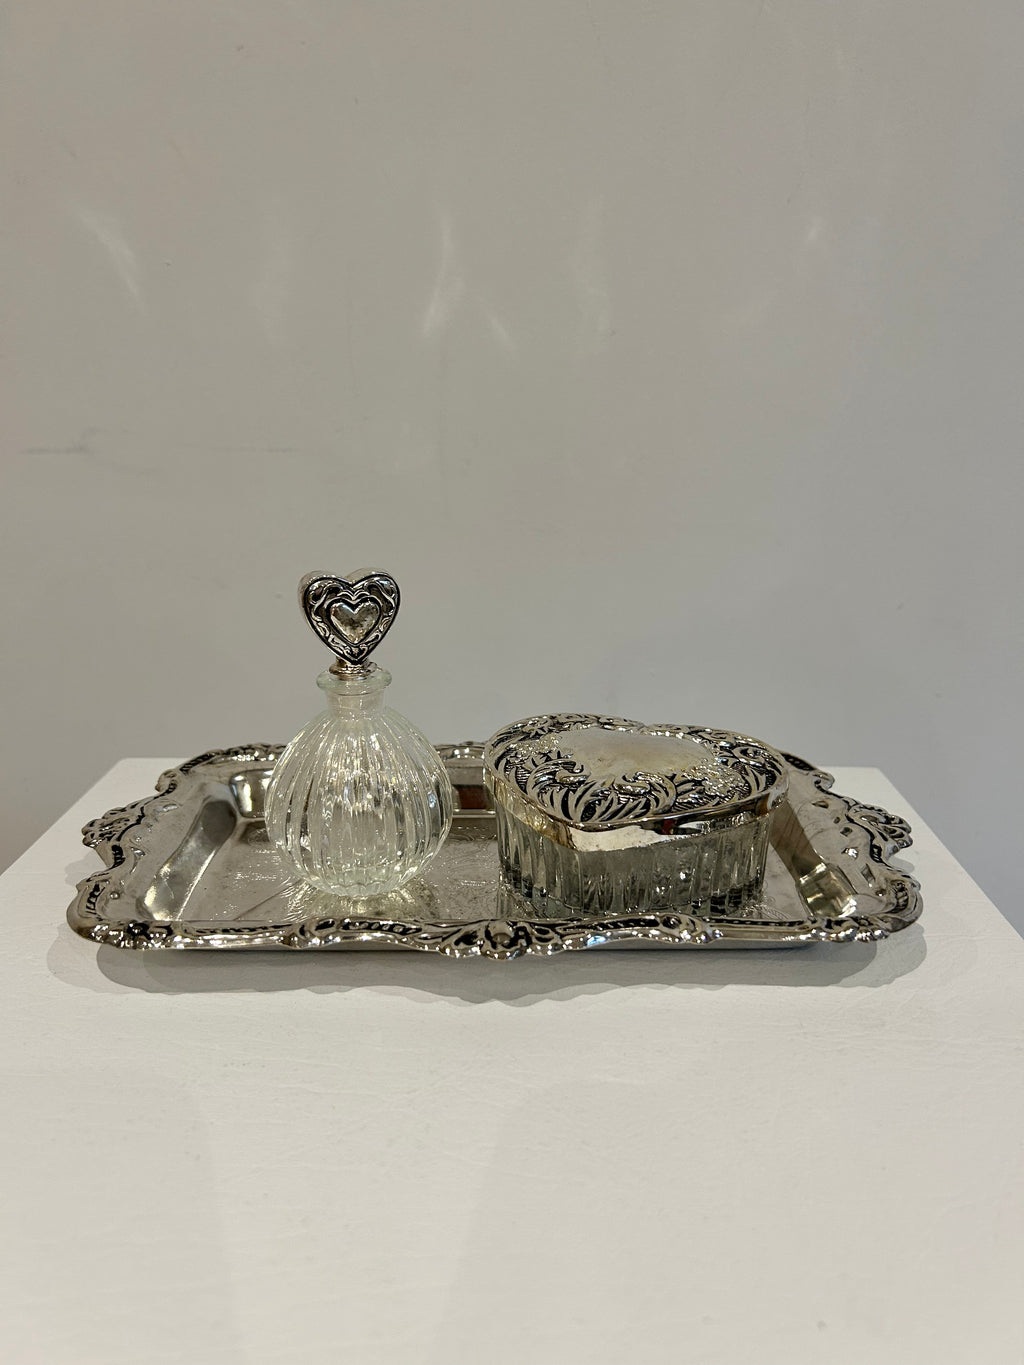 Antique ornate silver plated vanity set